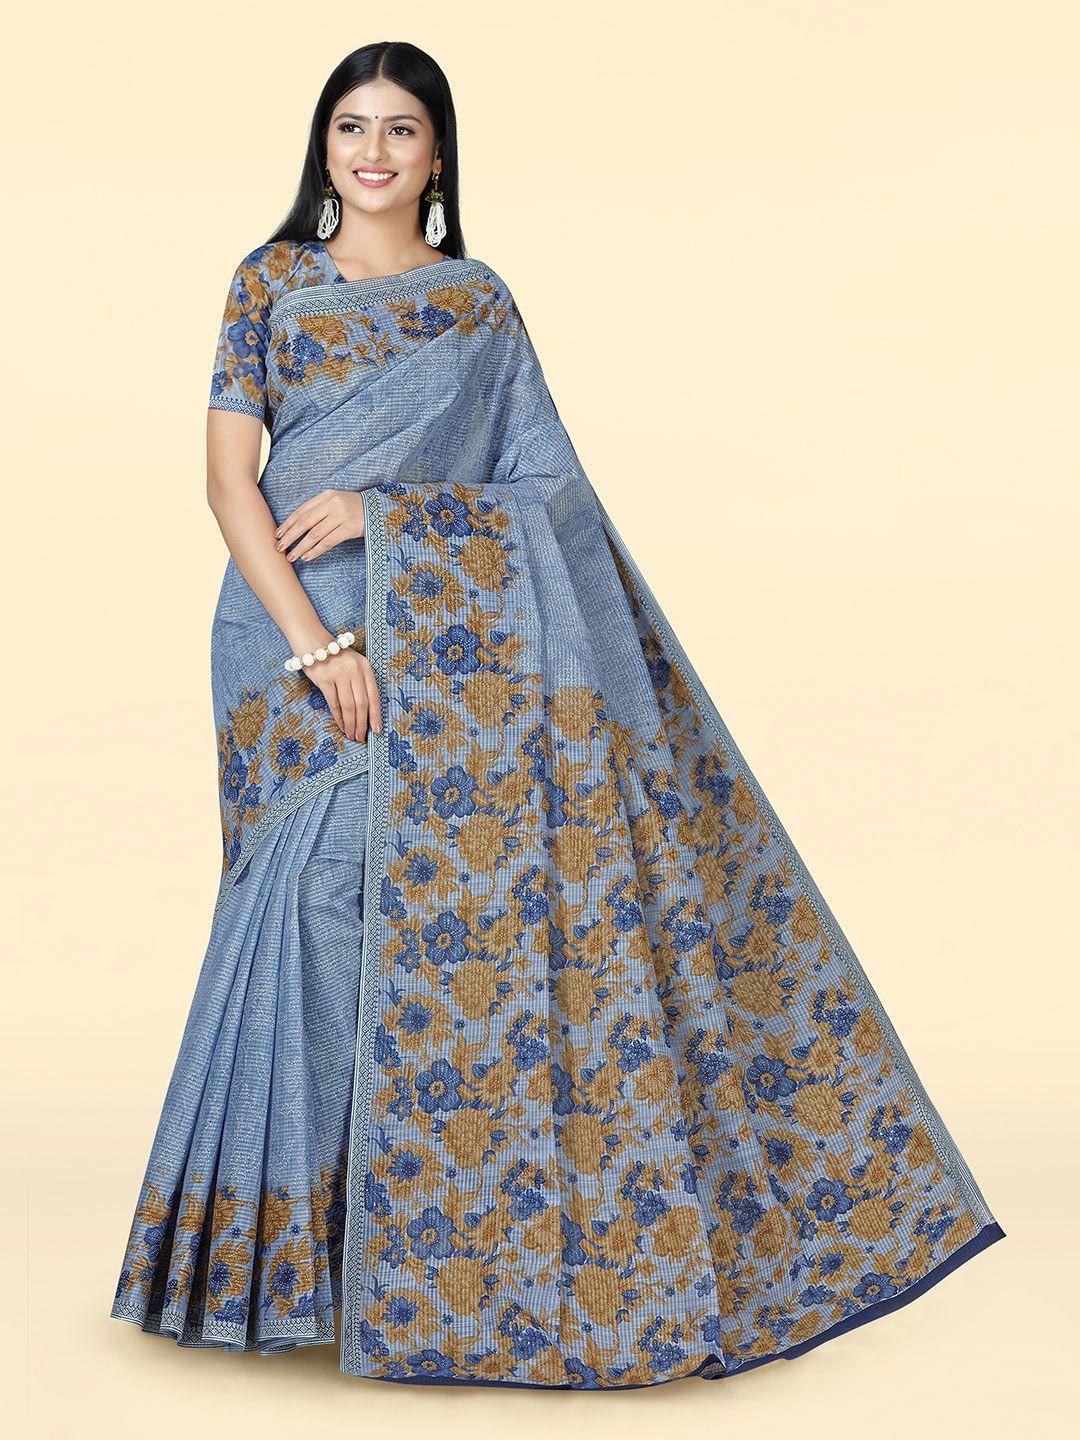 shanvika floral printed pure cotton saree